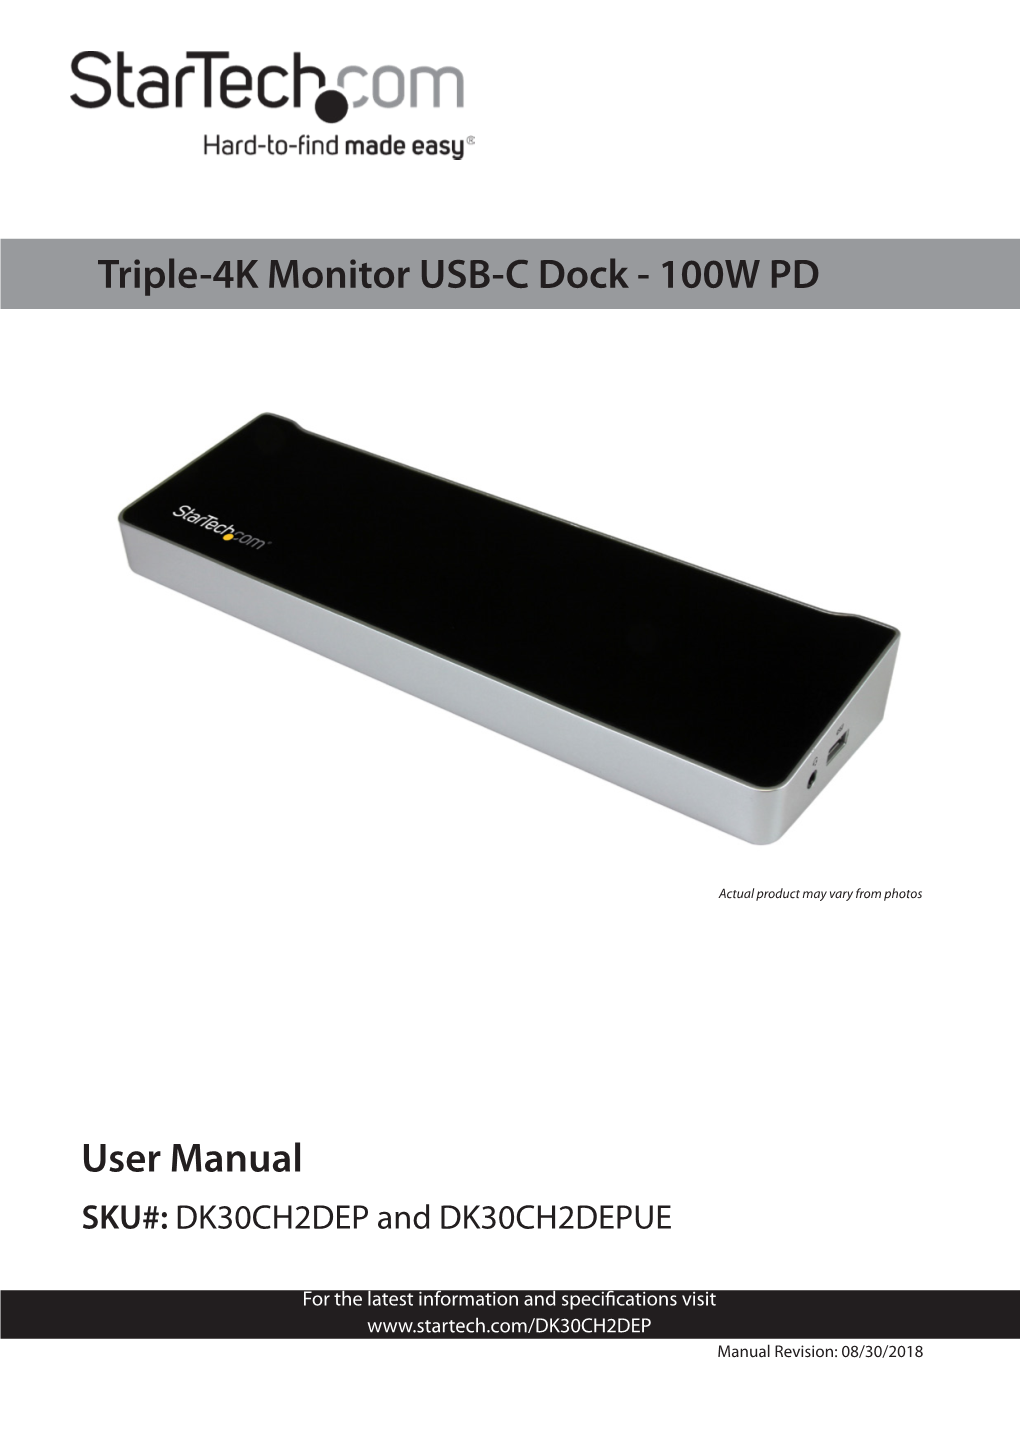 User Manual Triple-4K Monitor USB-C Dock